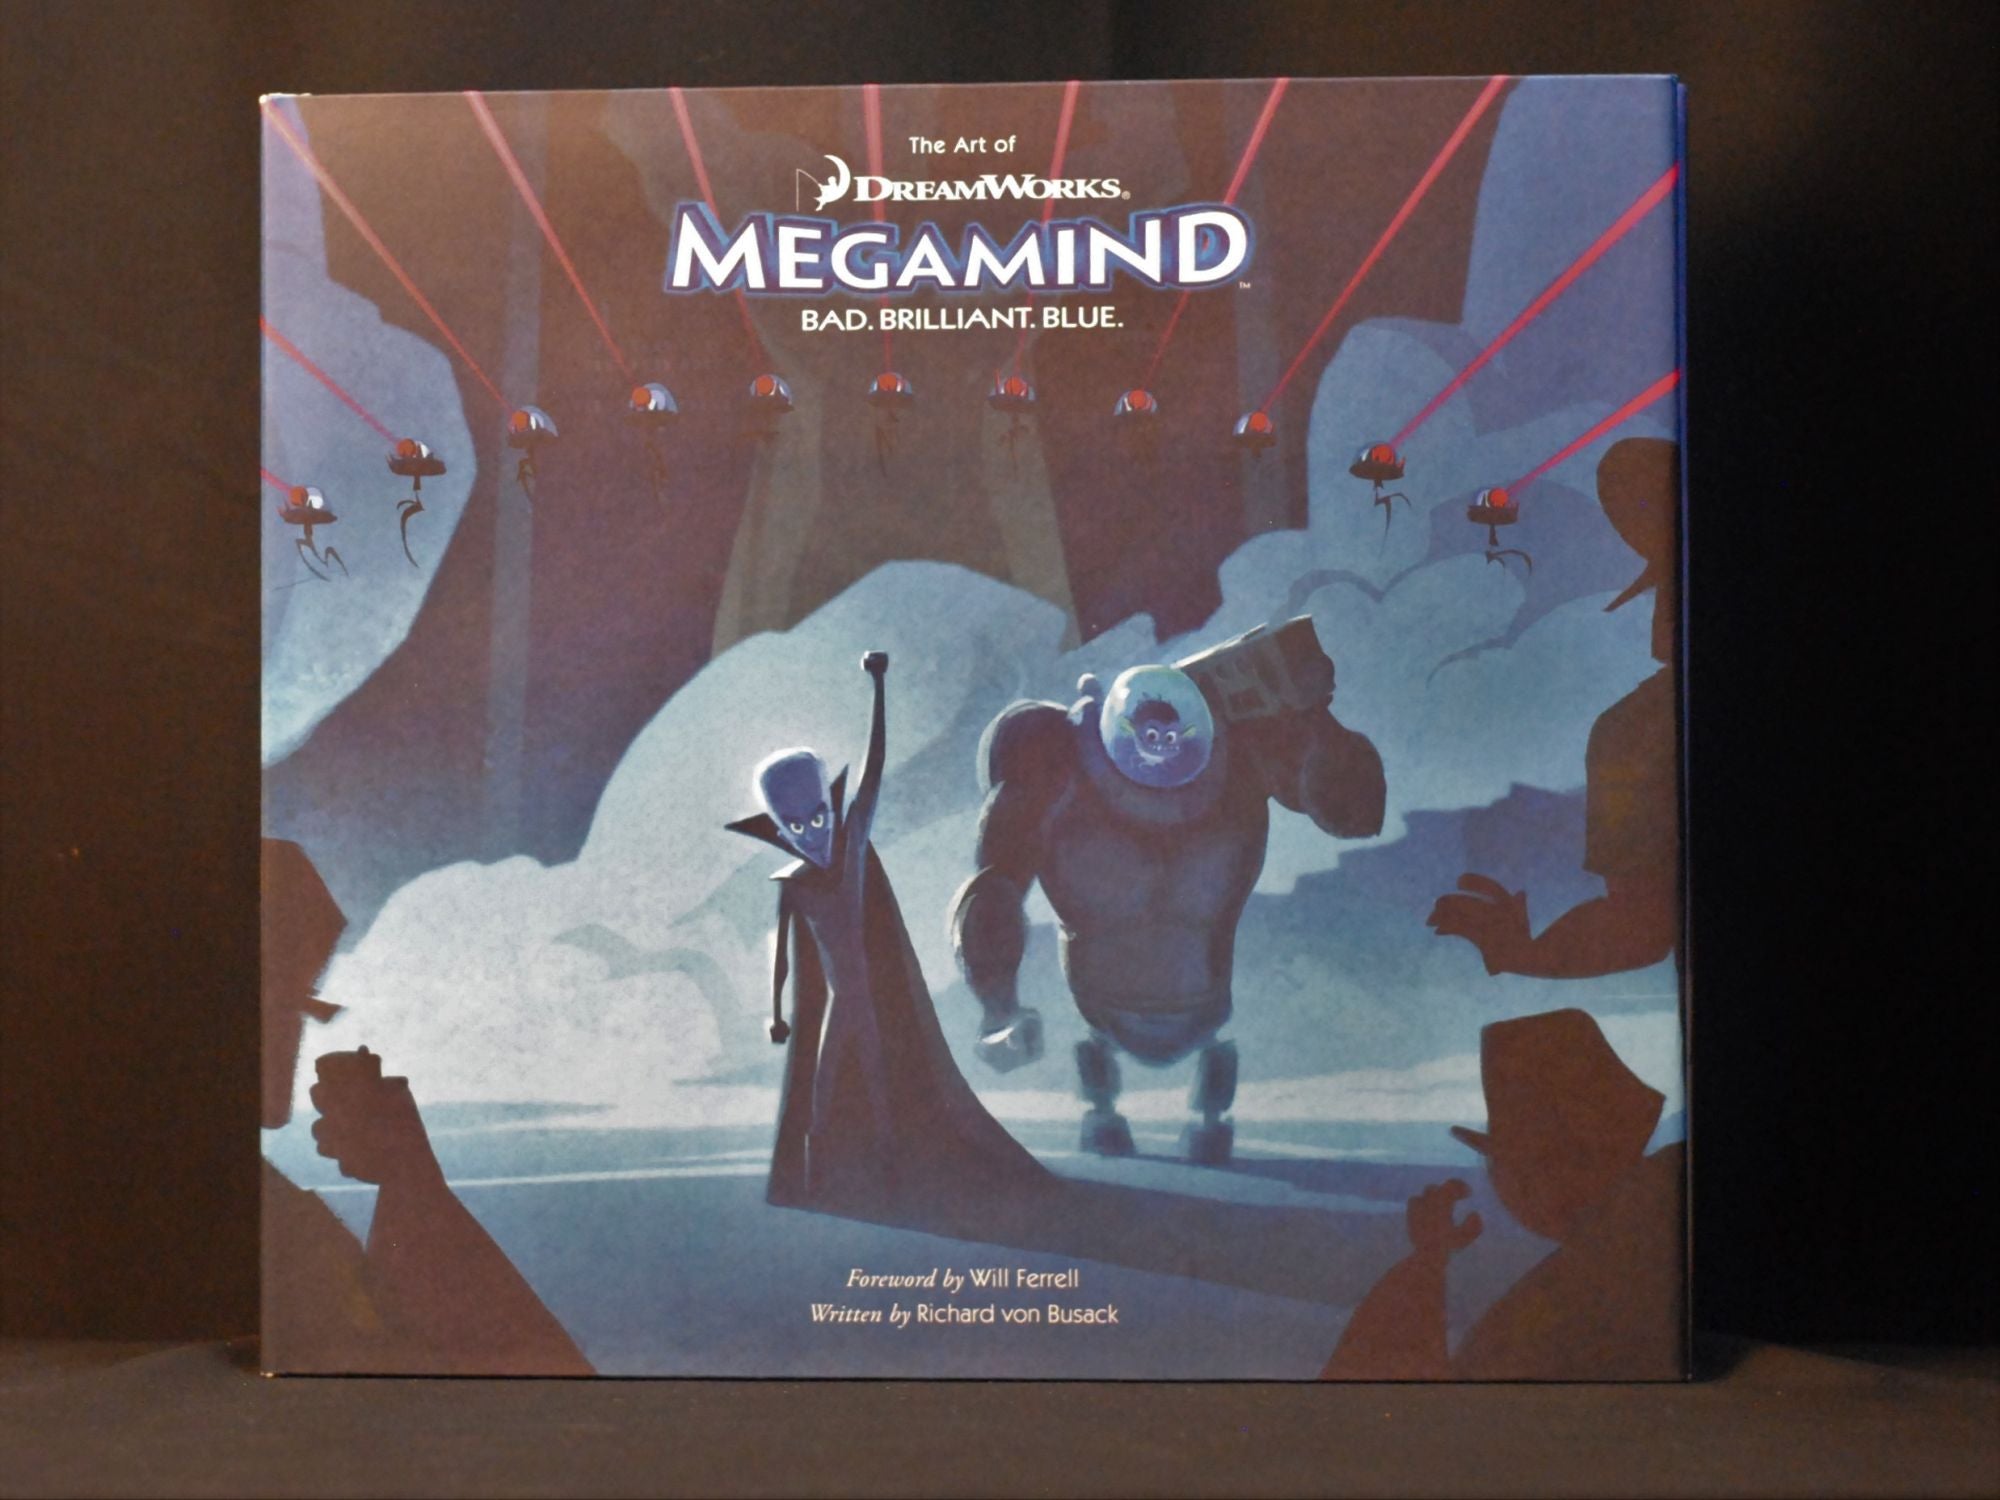 The Art of Megamind (Dreamworks)